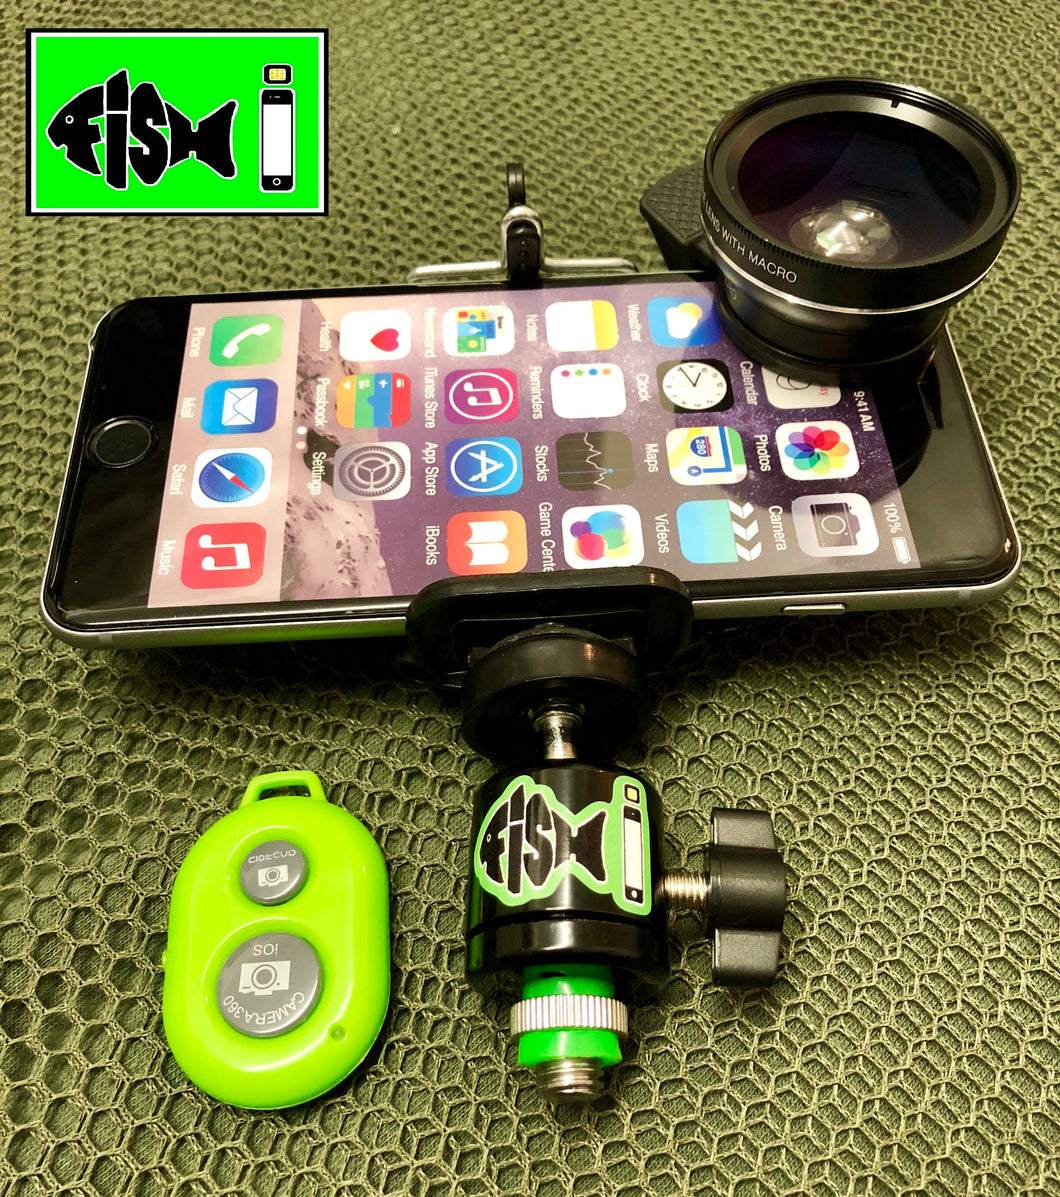 Phone Holder With Clip On Led Light . 0.45x Super Wide Lens & Remote - FiSH i 